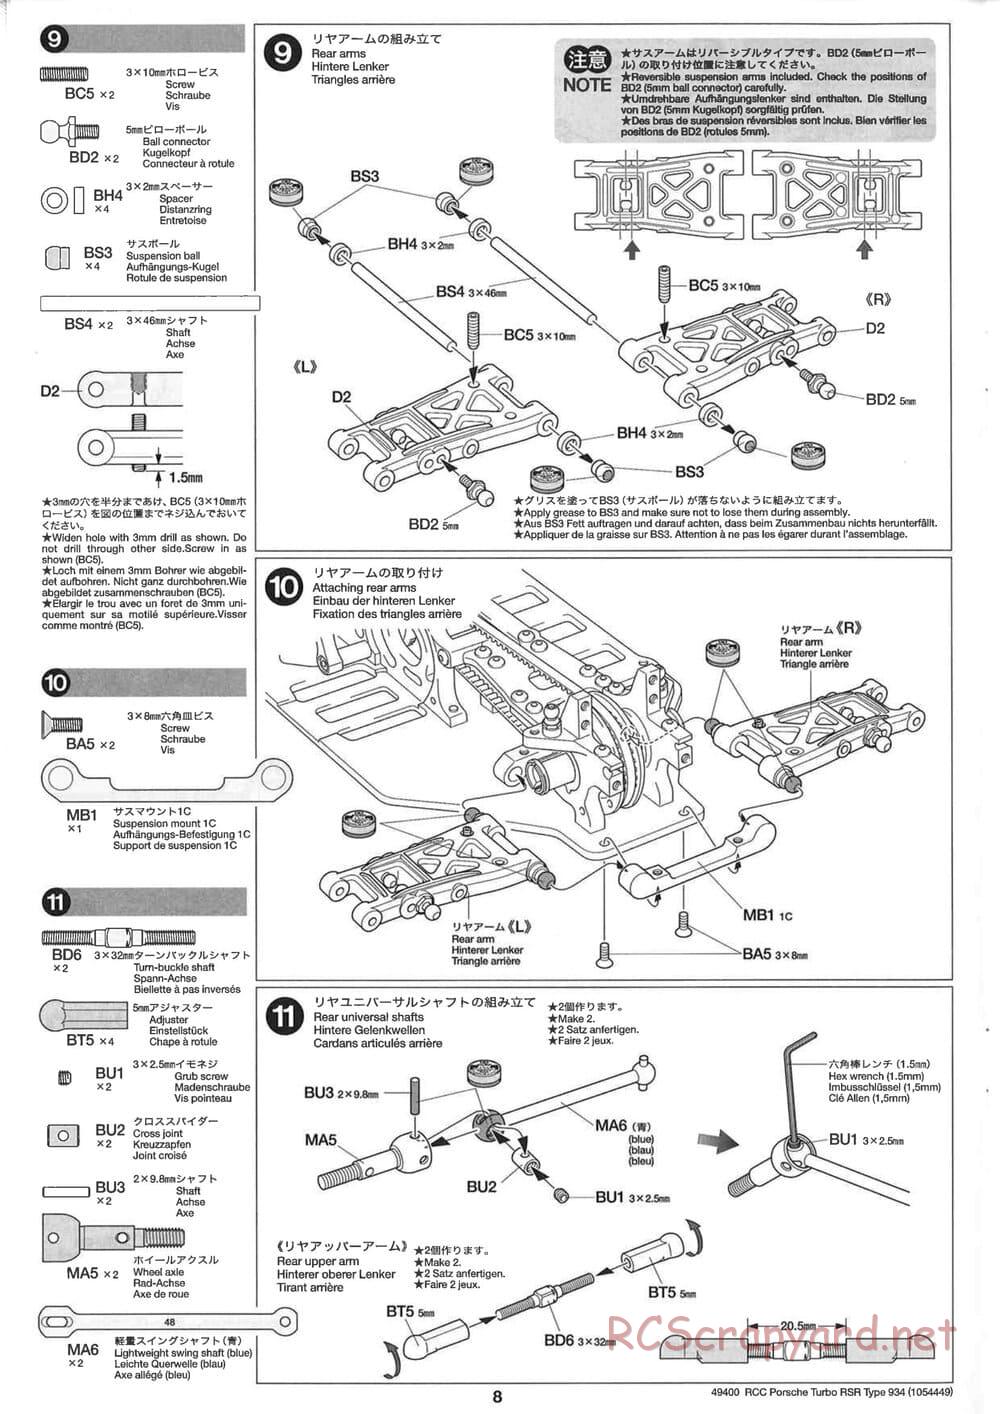 Tamiya - Porsche Turbo RSR Type 934 - TA05 Chassis - Manual - Page 8